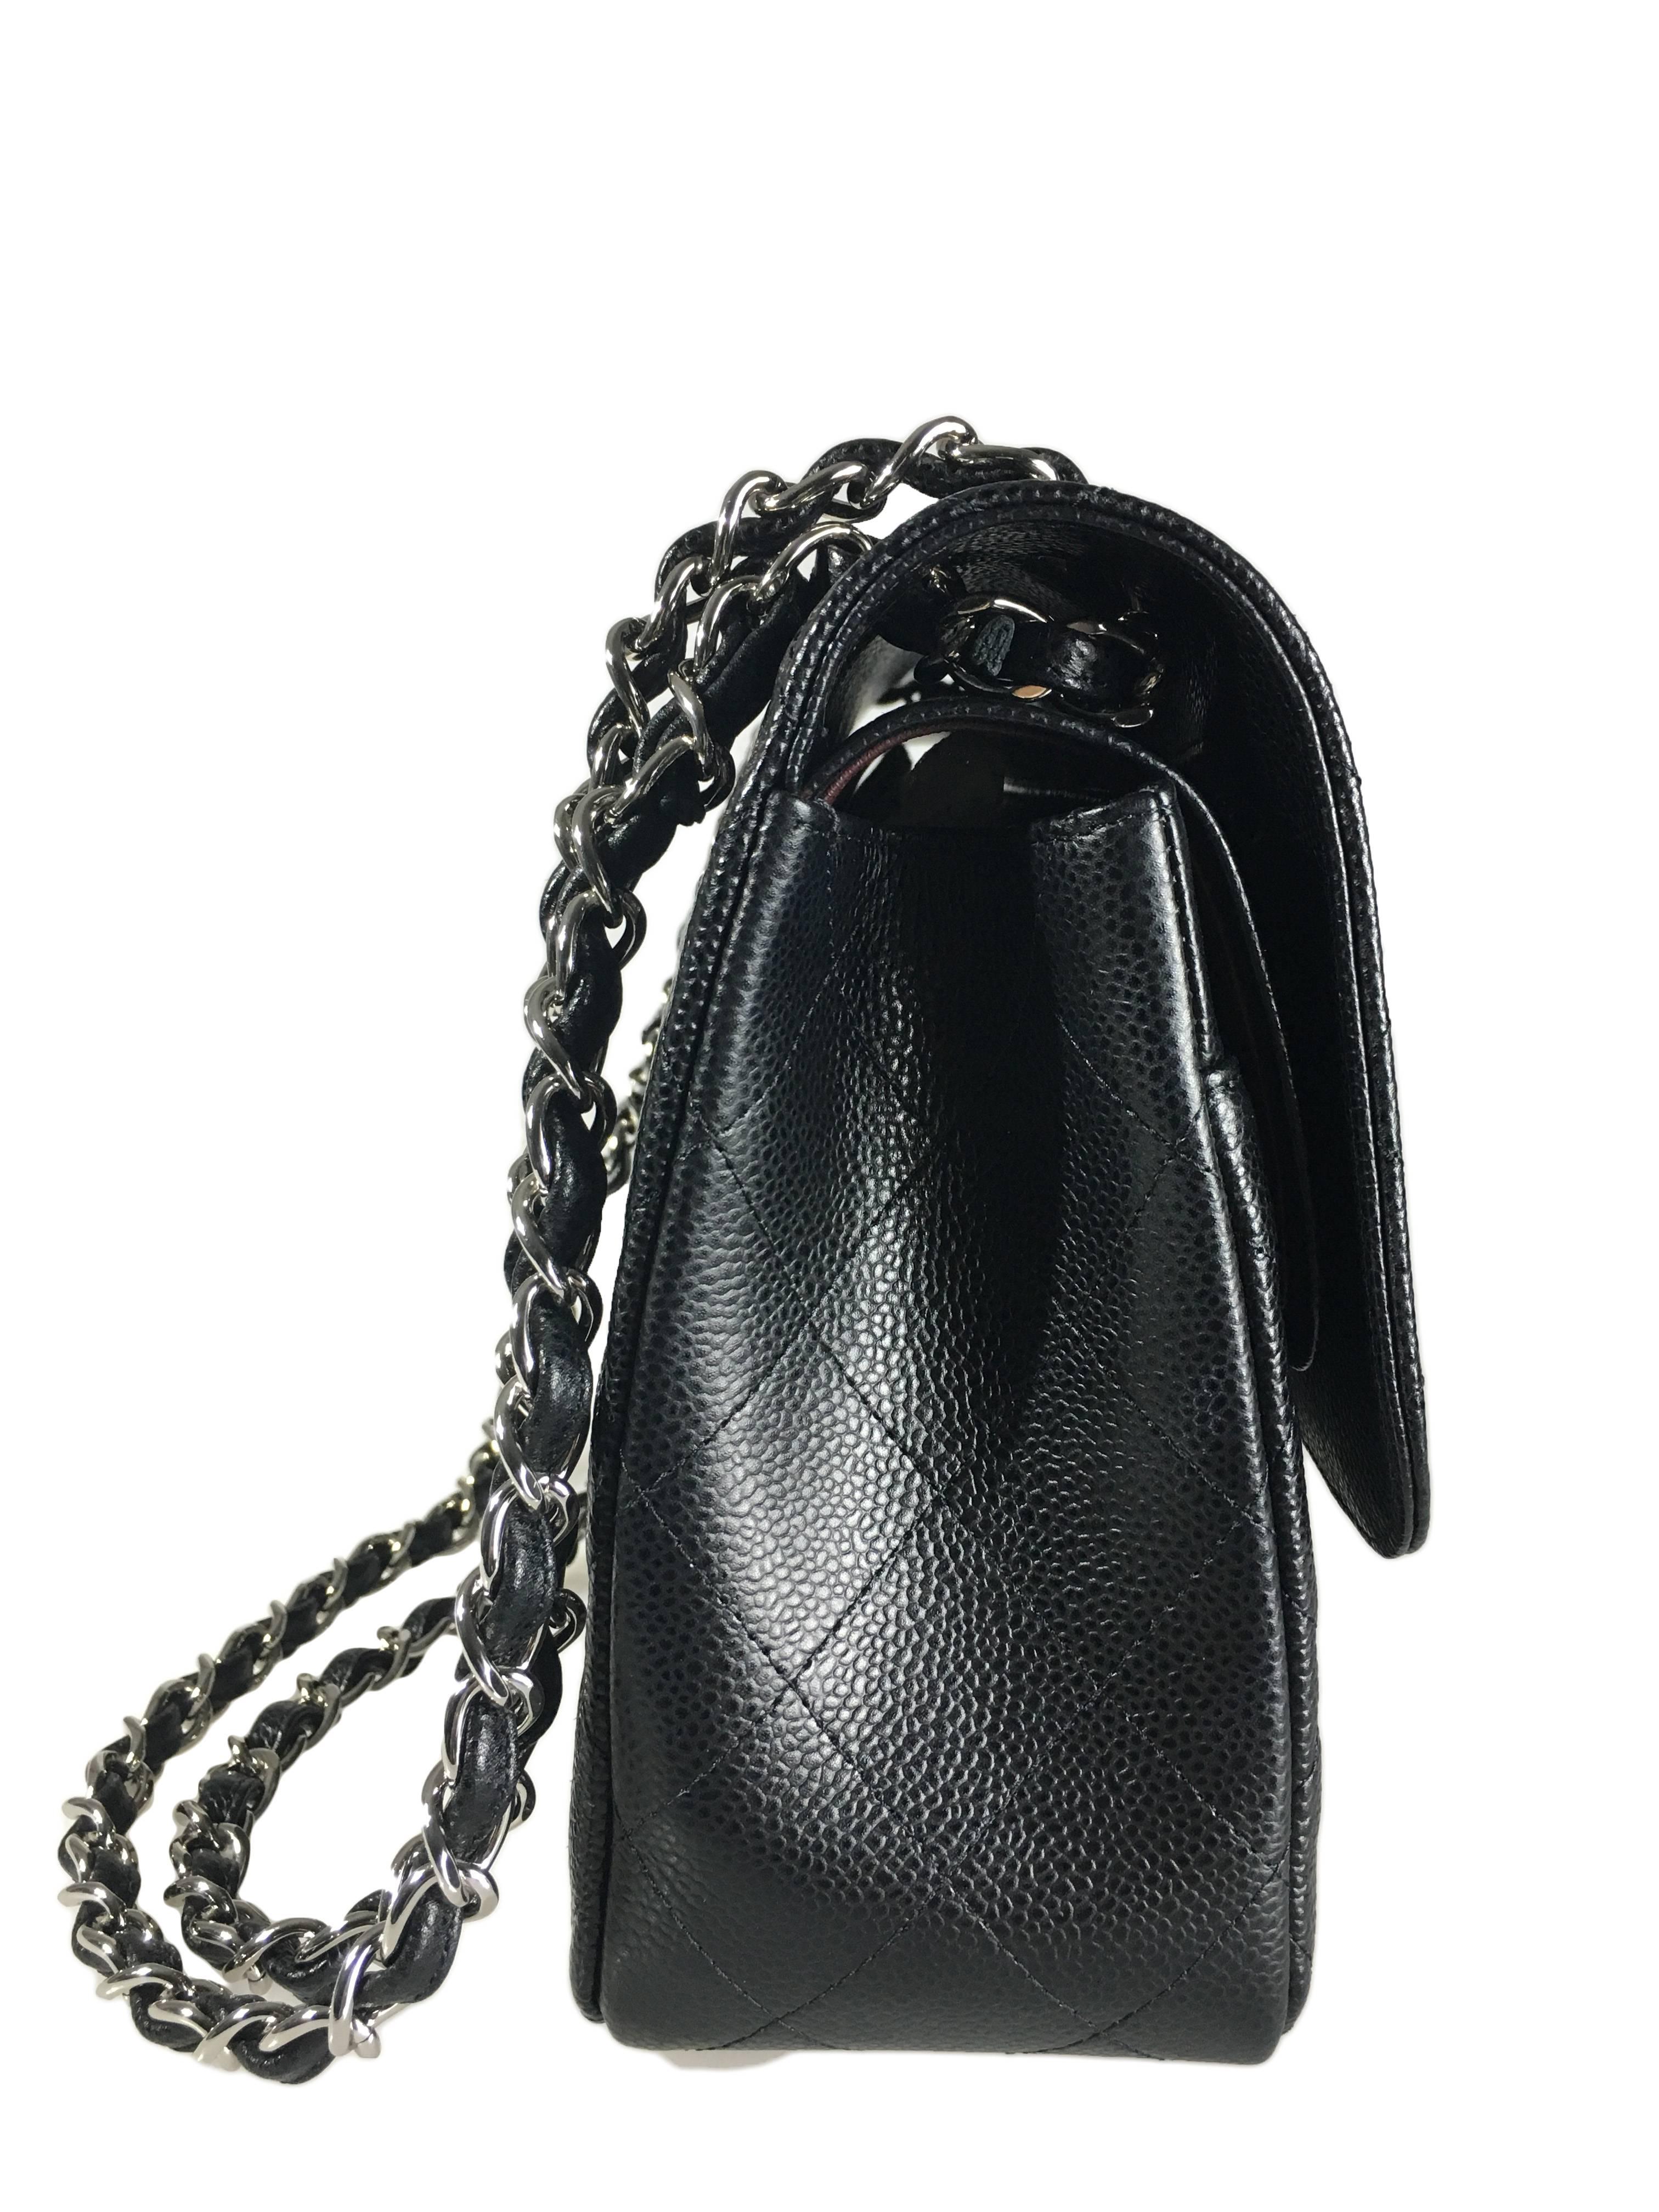 Women's Chanel Black Caviar Leather Classic Jumbo Double Flap Bag